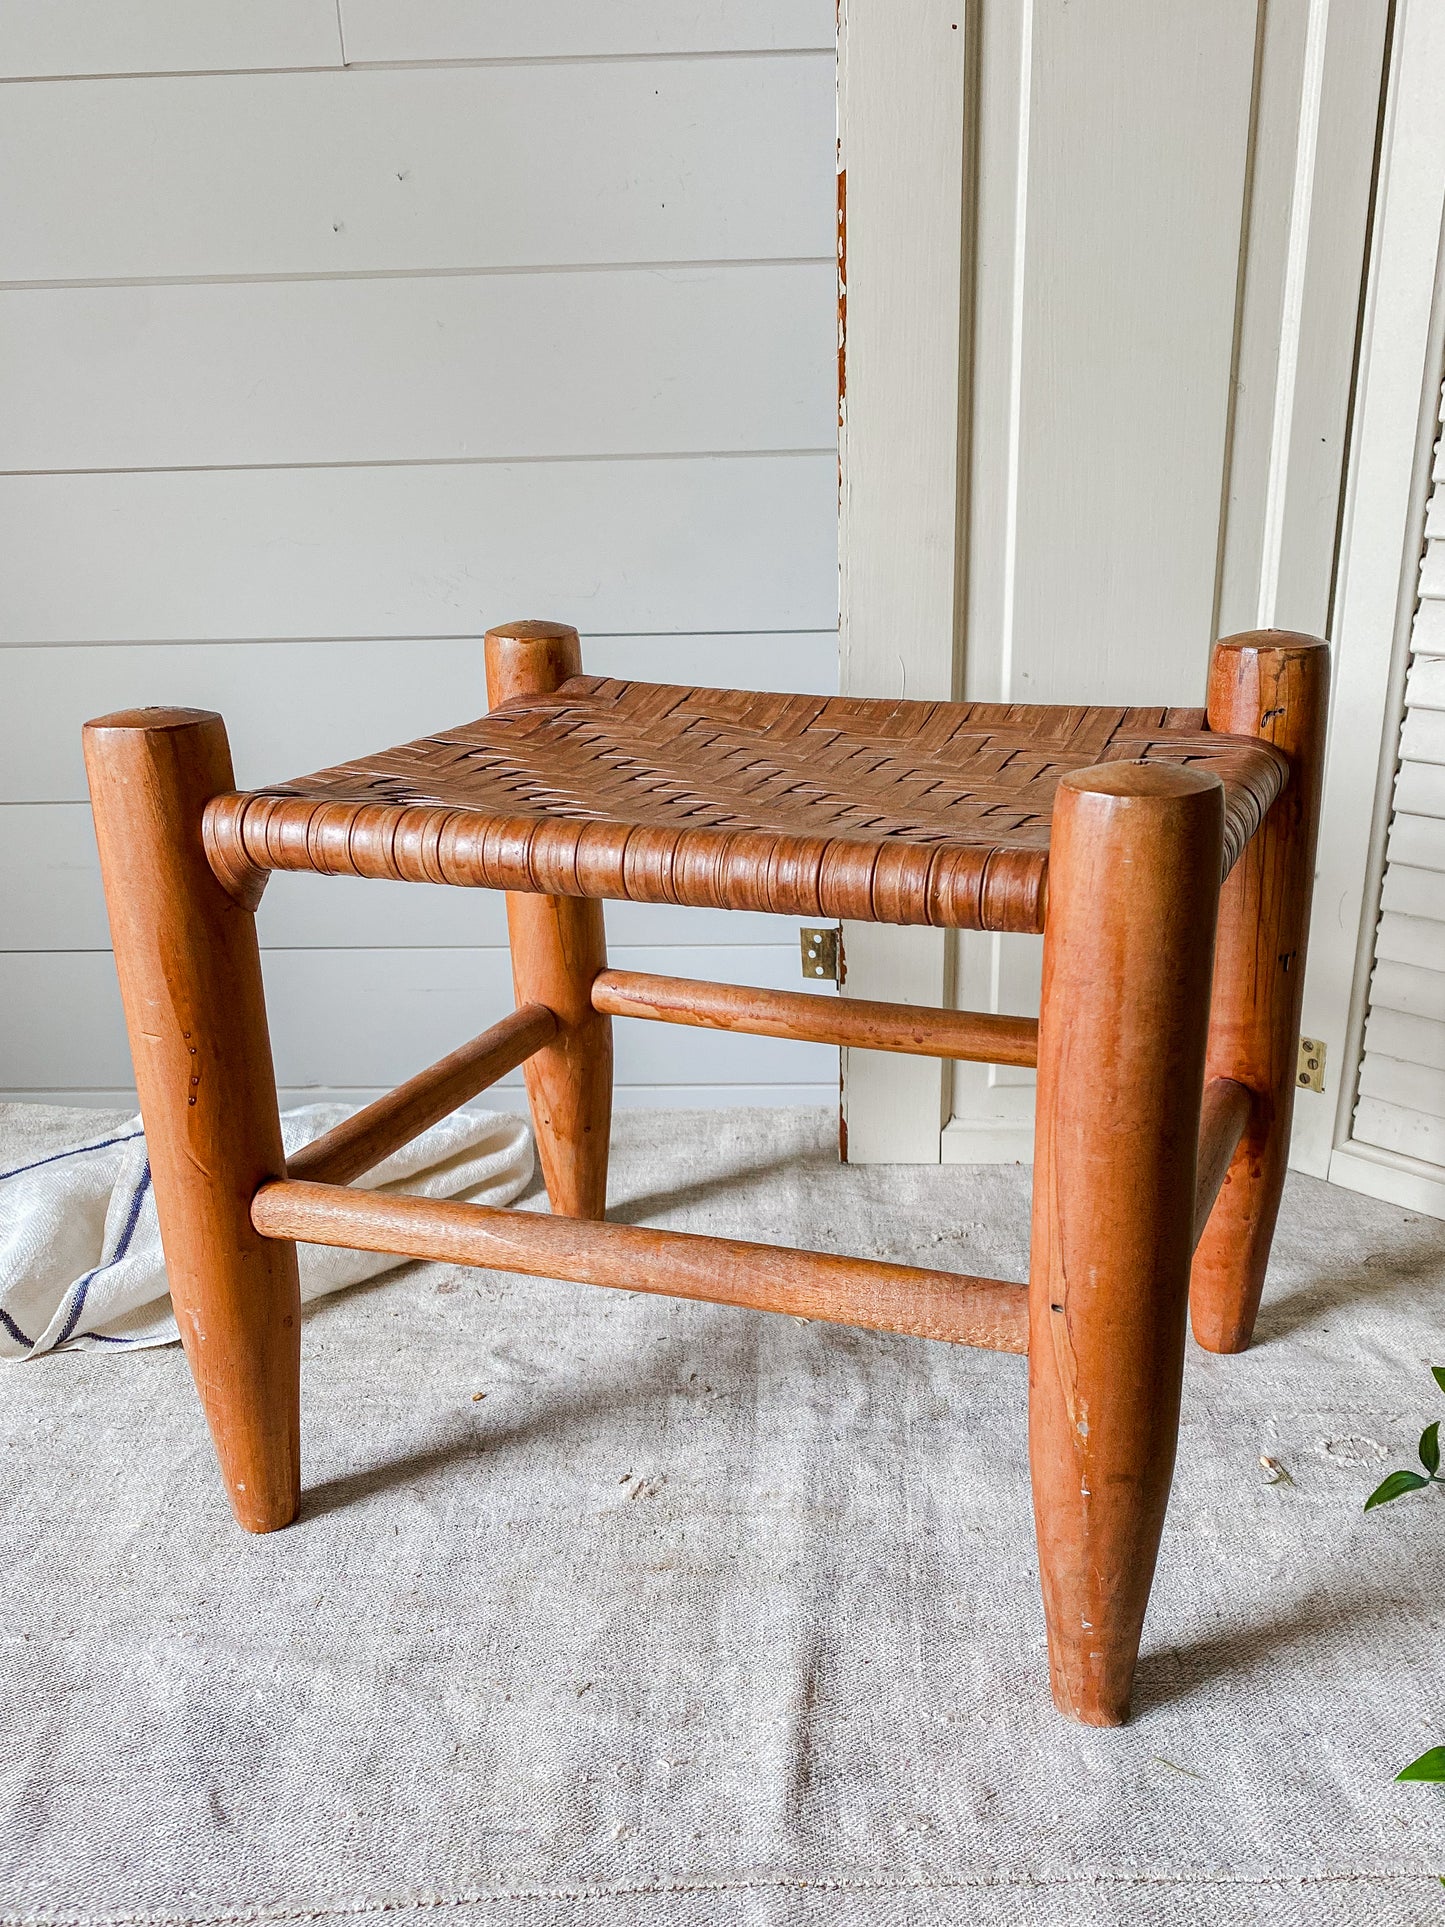 Vintage Handmade Shaker Style Stool with Woven Split Wood Seat | Flat Rush Stool